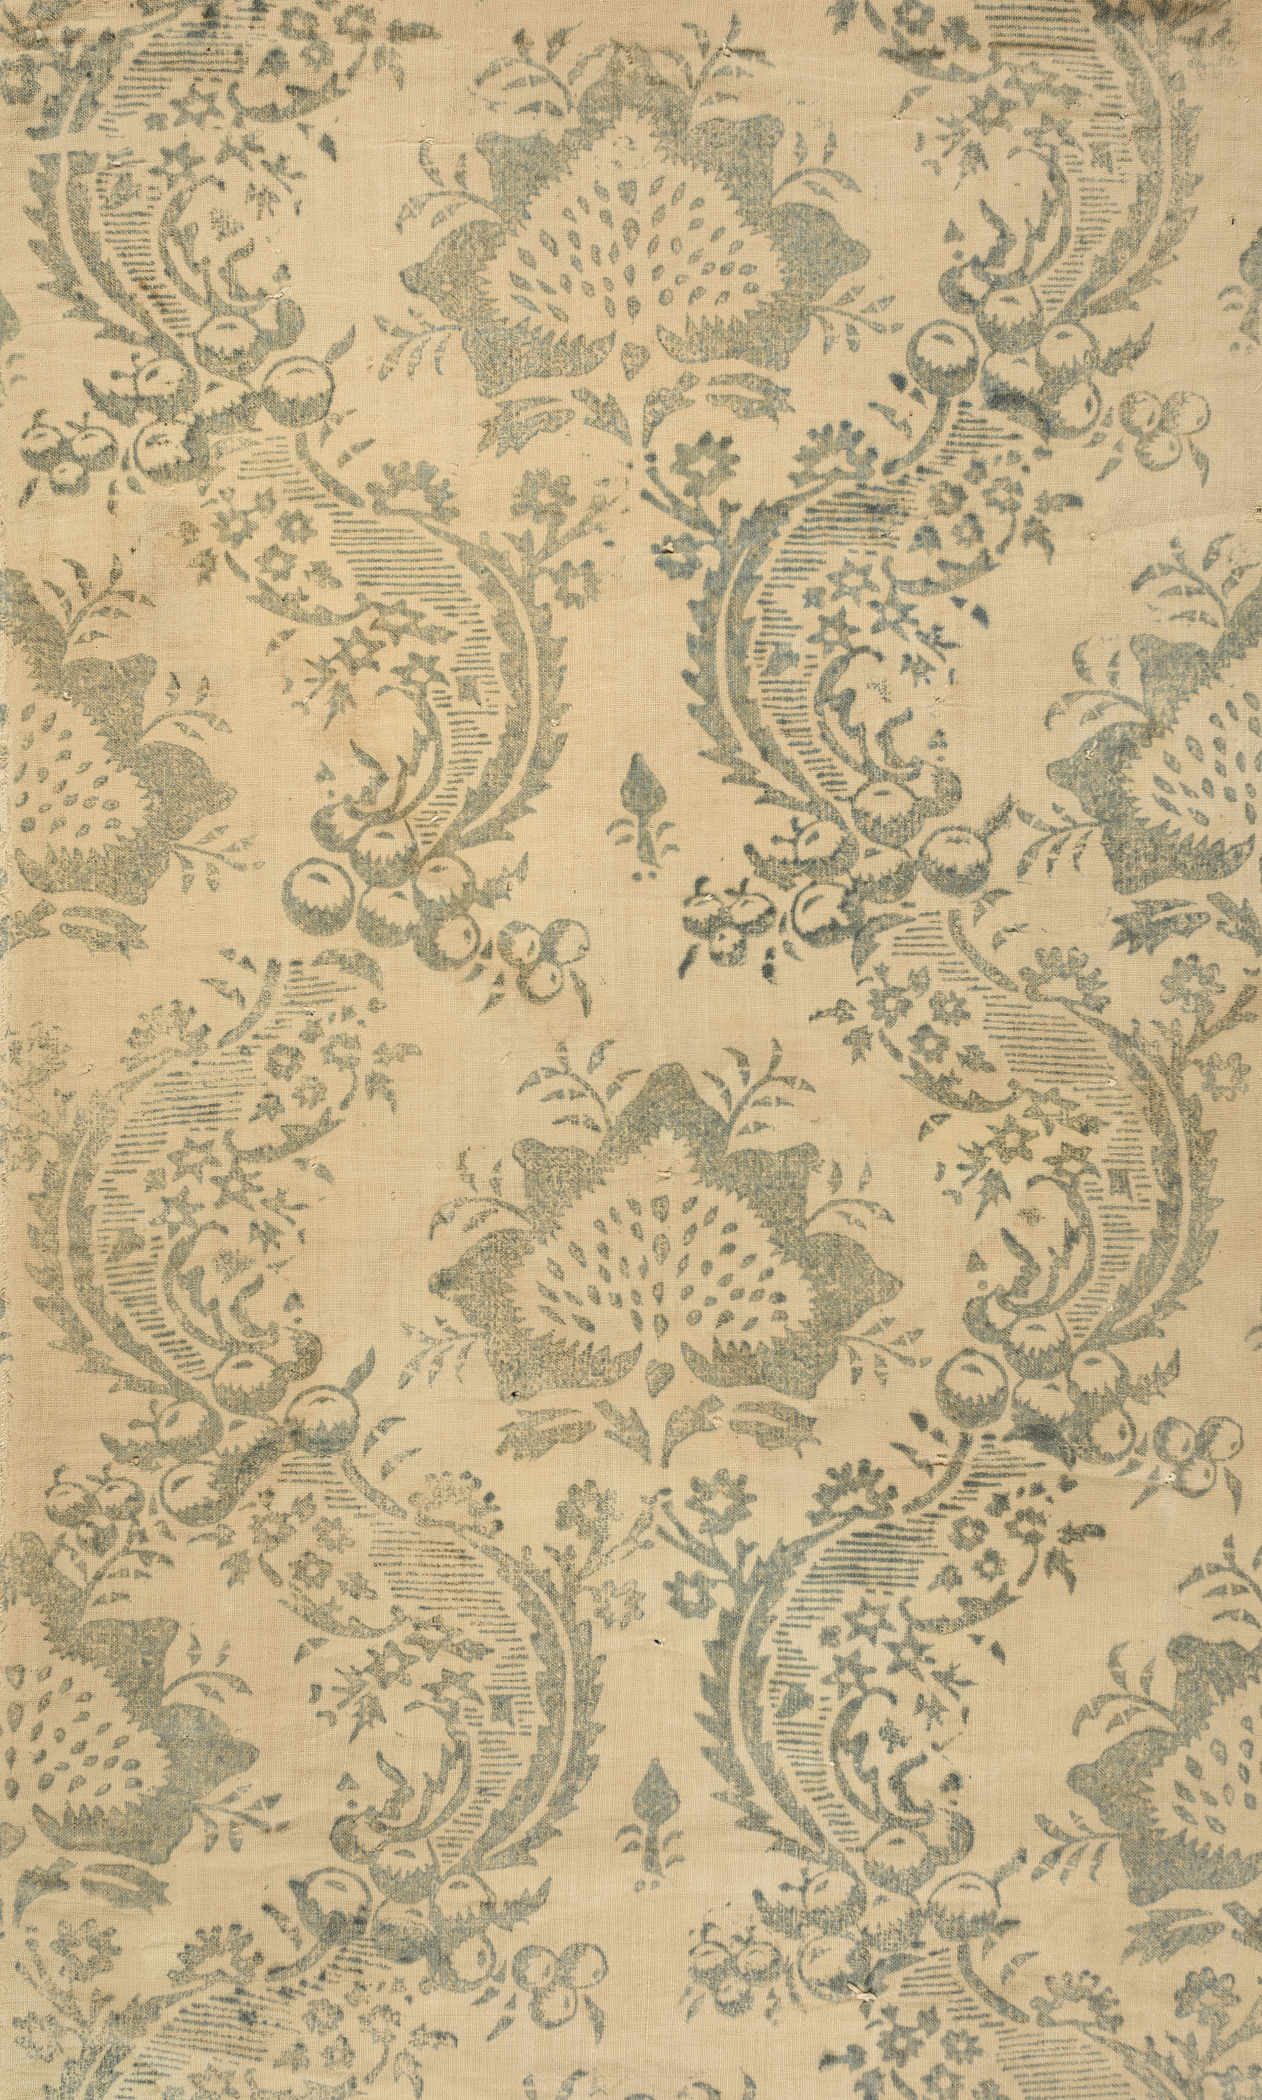 1960.0099 Textile, printed, detail 1, pattern repeat